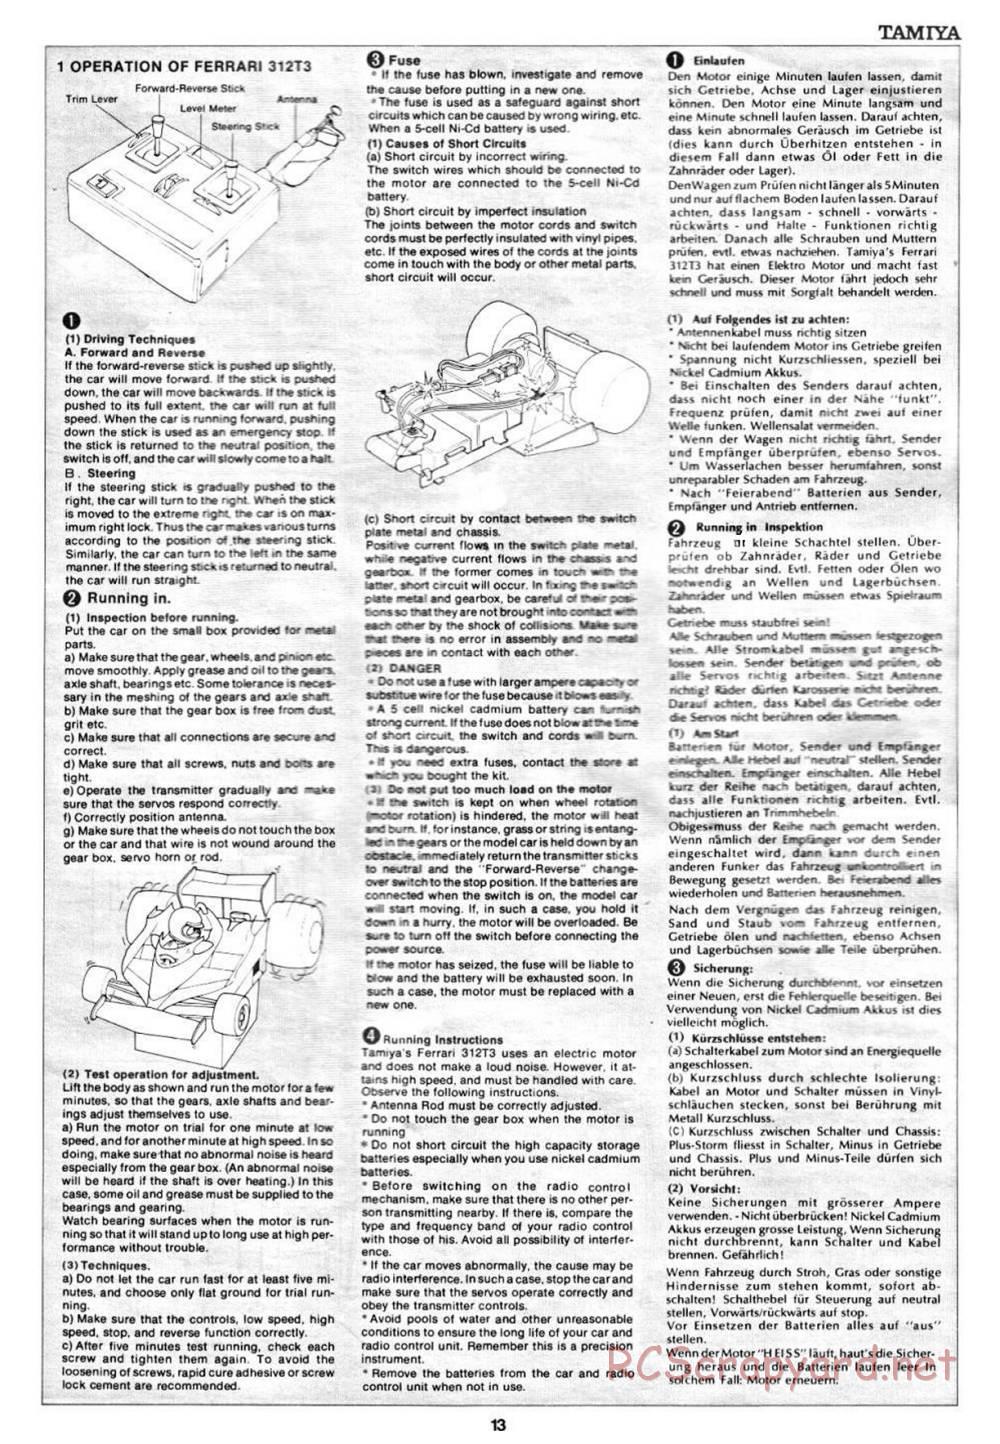 Tamiya - Ferrari 312T3 - 58011 - Manual - Page 13